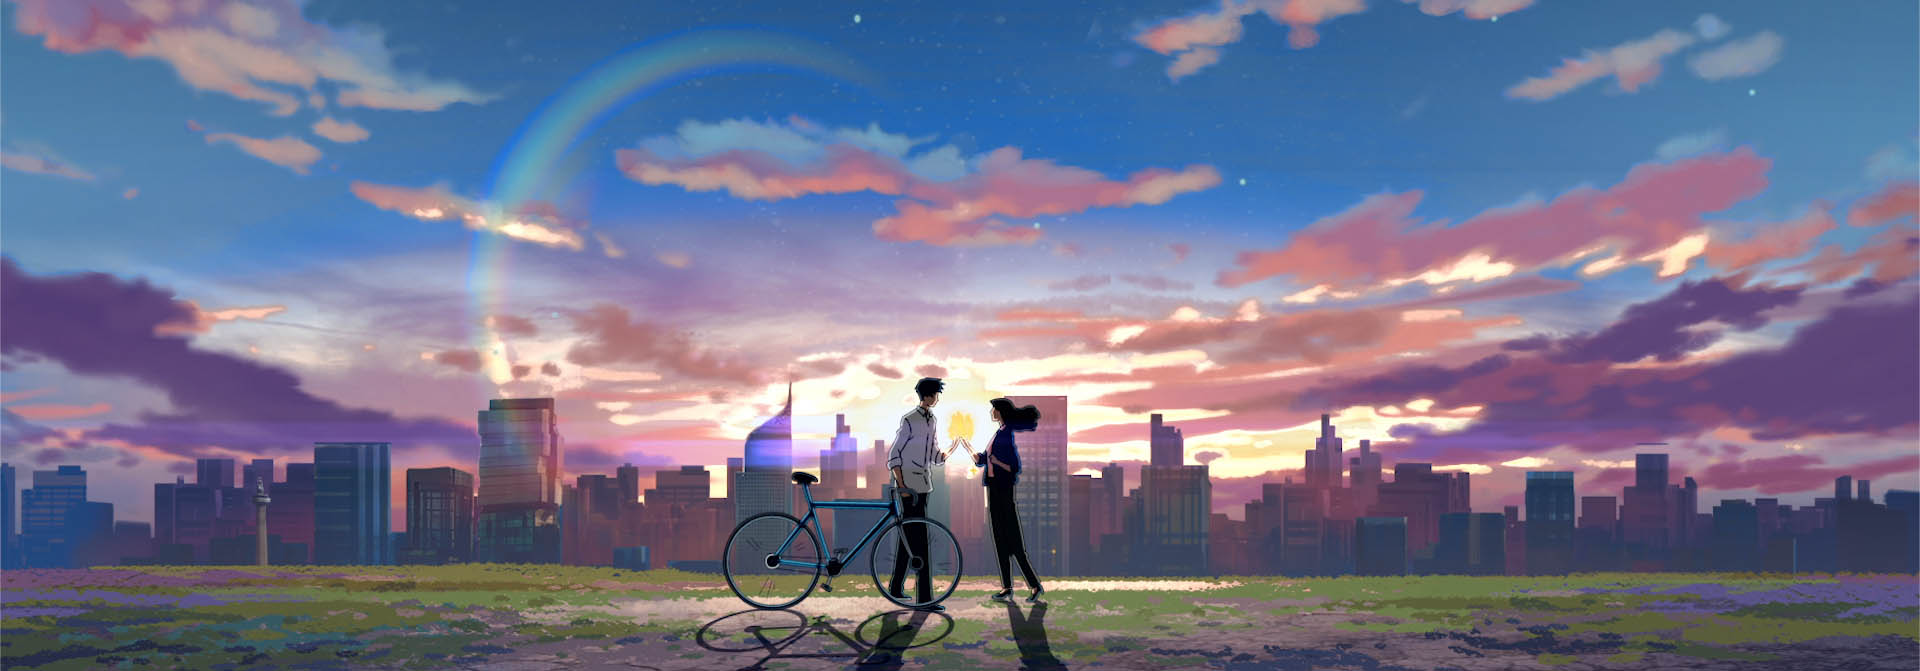 Iklan Anime Sasa Tepung Bumbu Dari Finch Creative Agency Beri Pesan Optimisme